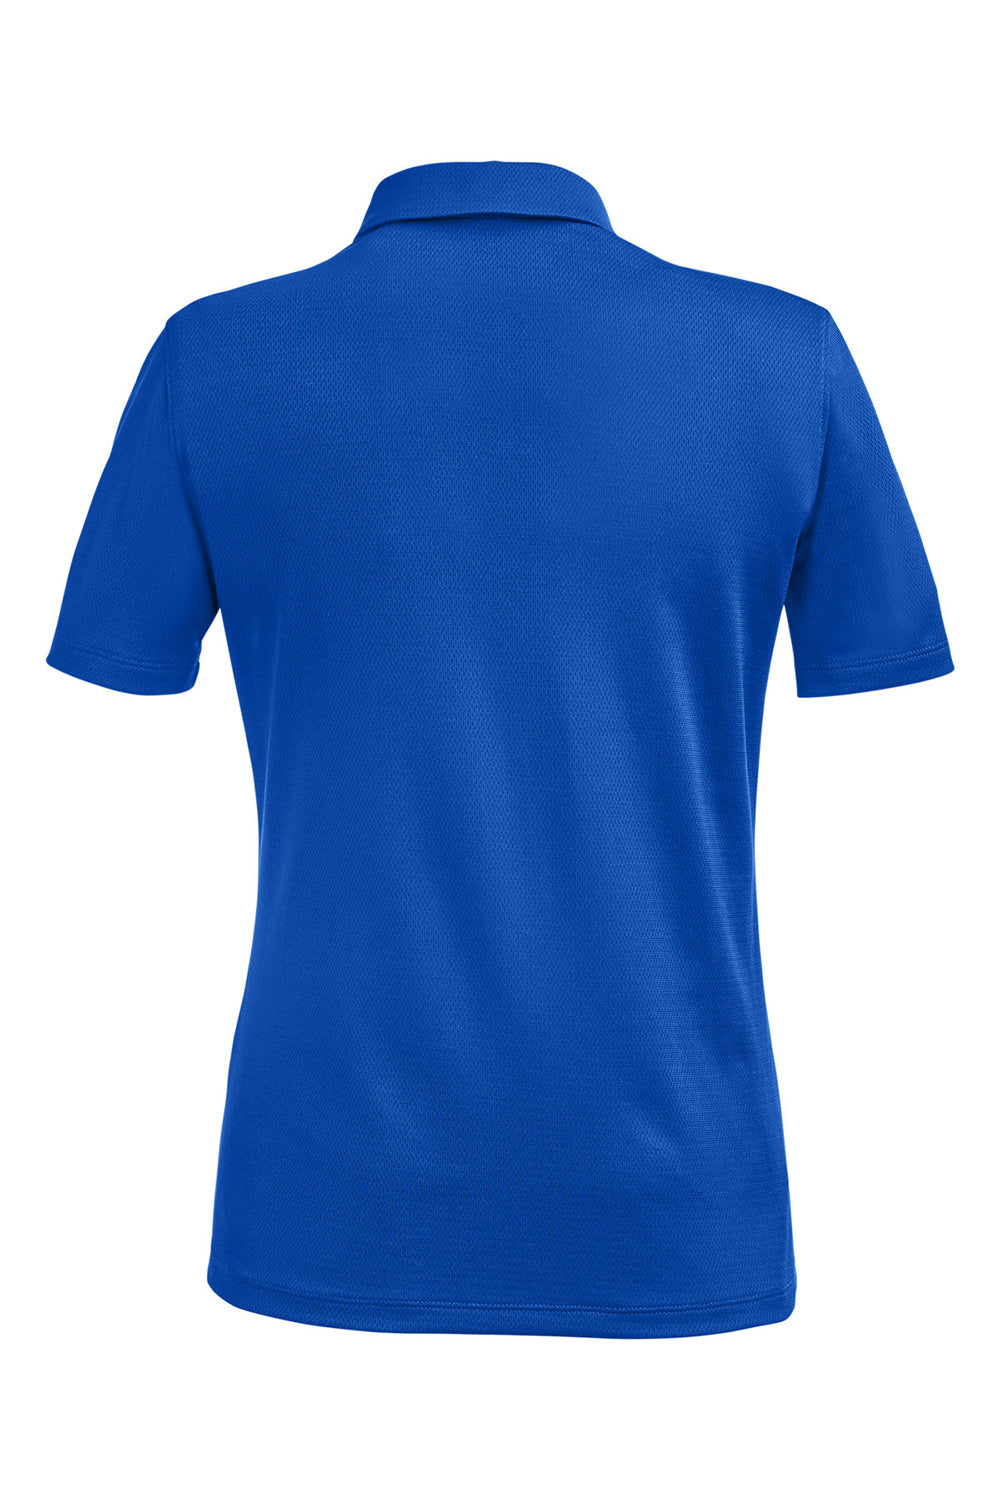 Under Armour 1370431 Womens Tech Moisture Wicking Short Sleeve Polo Shirt Royal Blue Flat Back